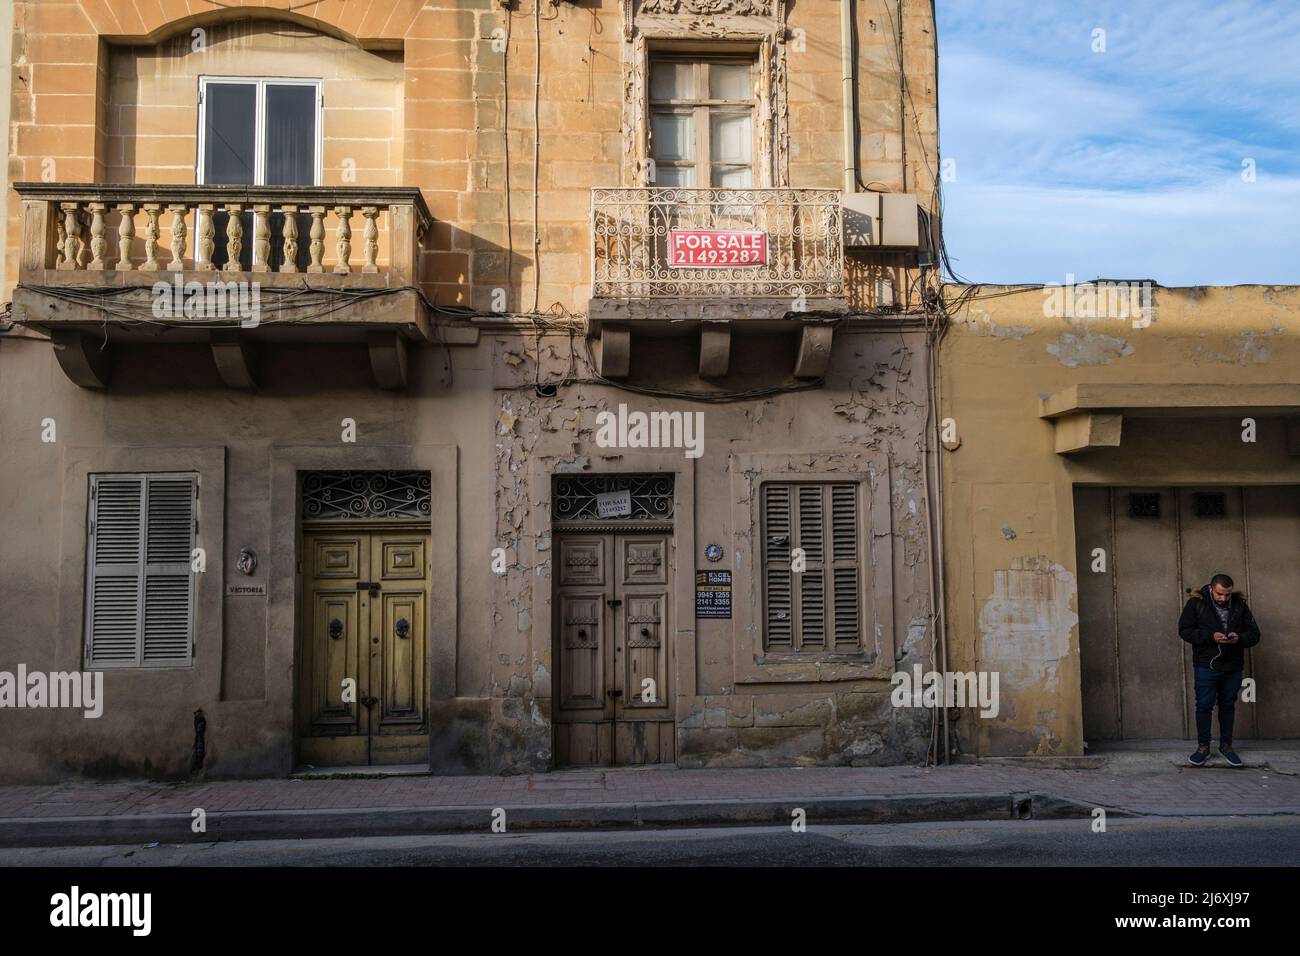 Old run-down buildings in St Paul's Bay, Malta Stock Photo